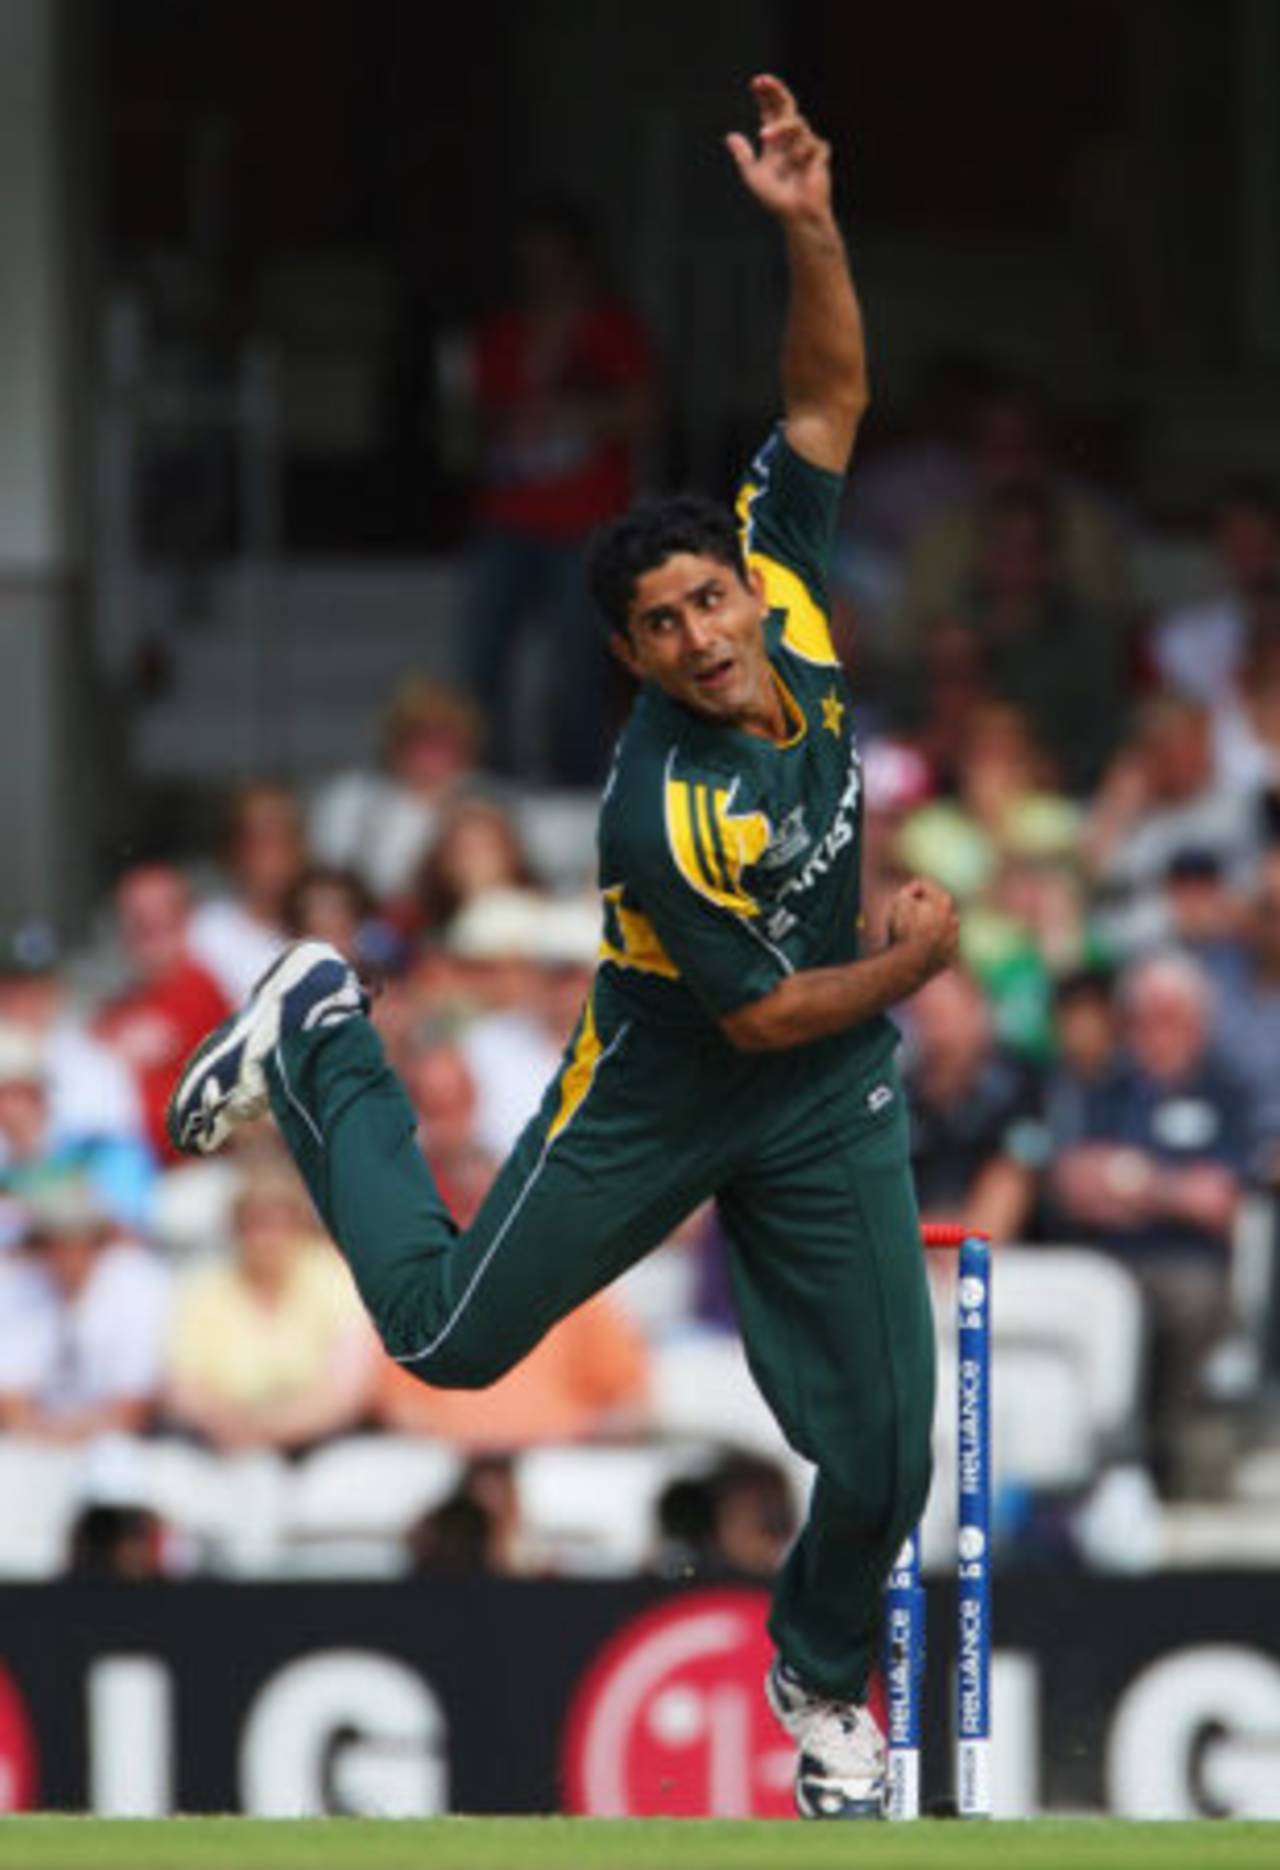 Abdul Razzaq in his delivery stride, New Zealand v Pakistan, ICC World Twenty20 Super Eights, The Oval, June 13, 2009